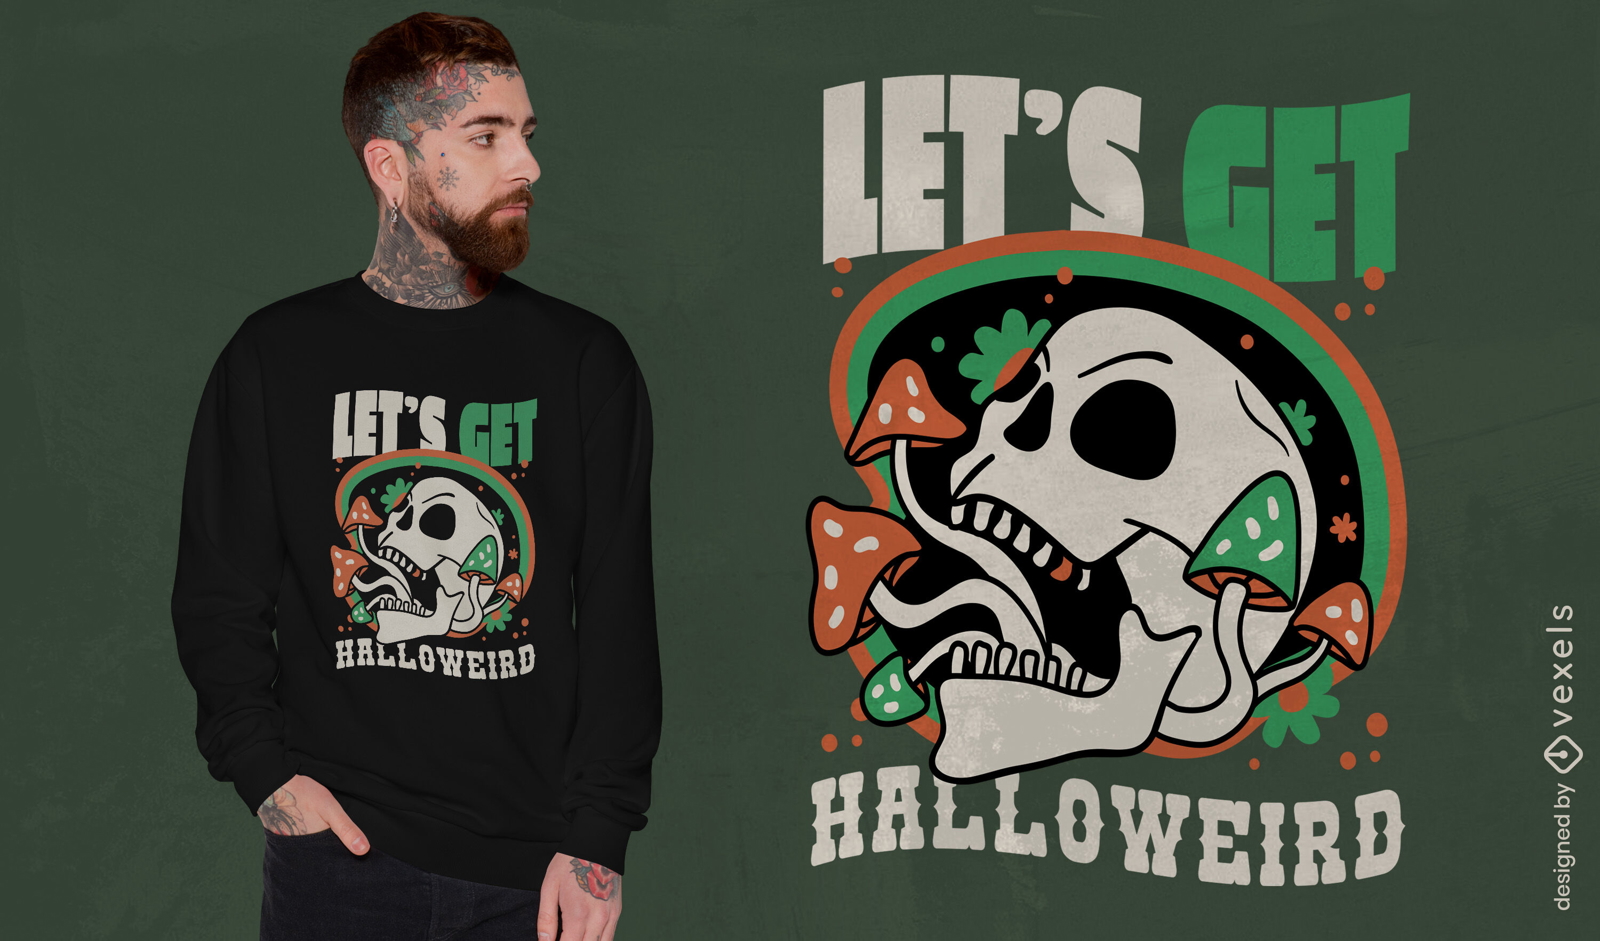 Halloweird trippy Sch?del-T-Shirt-Design